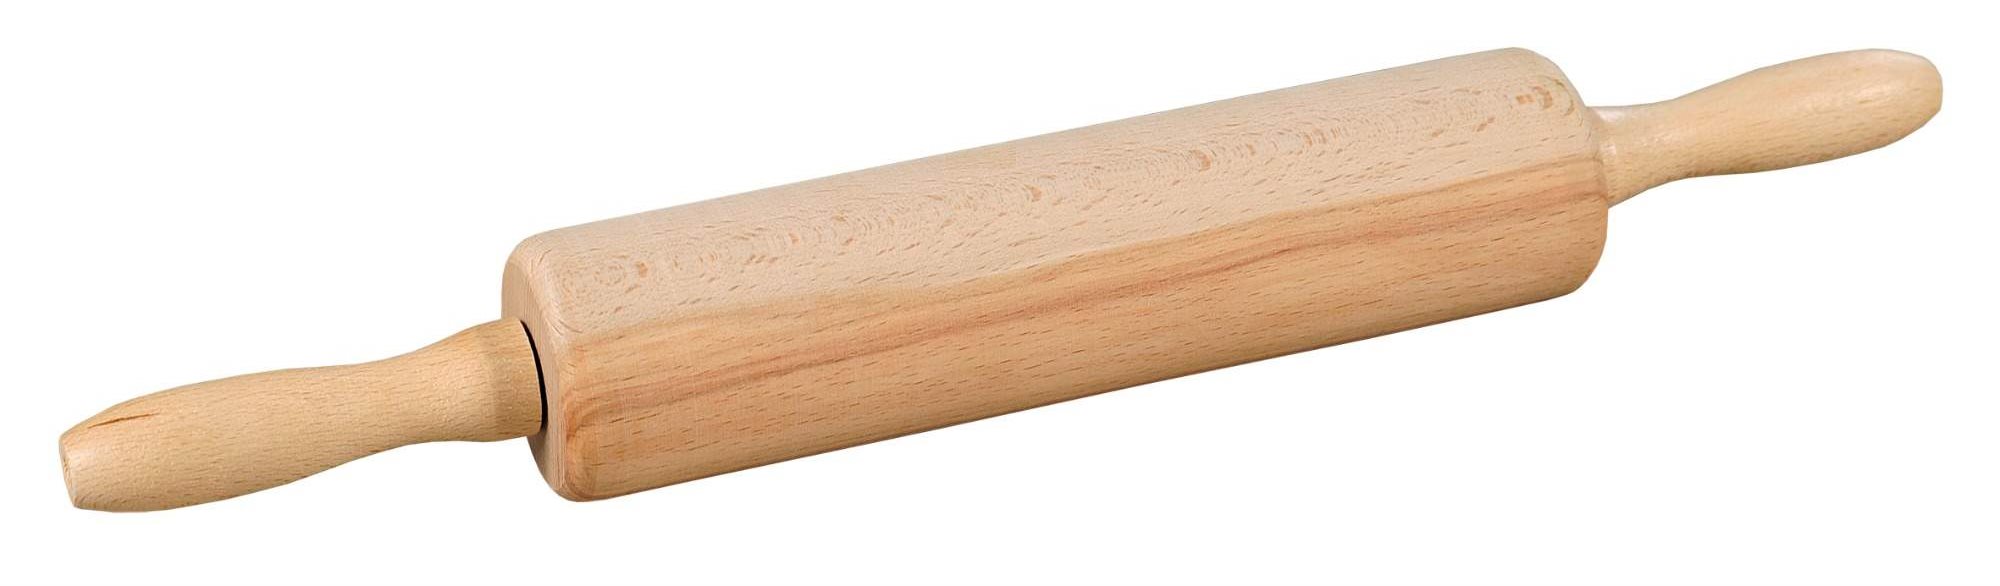 Kesper, bükkfa sodrófa, hossza 41,5 cm